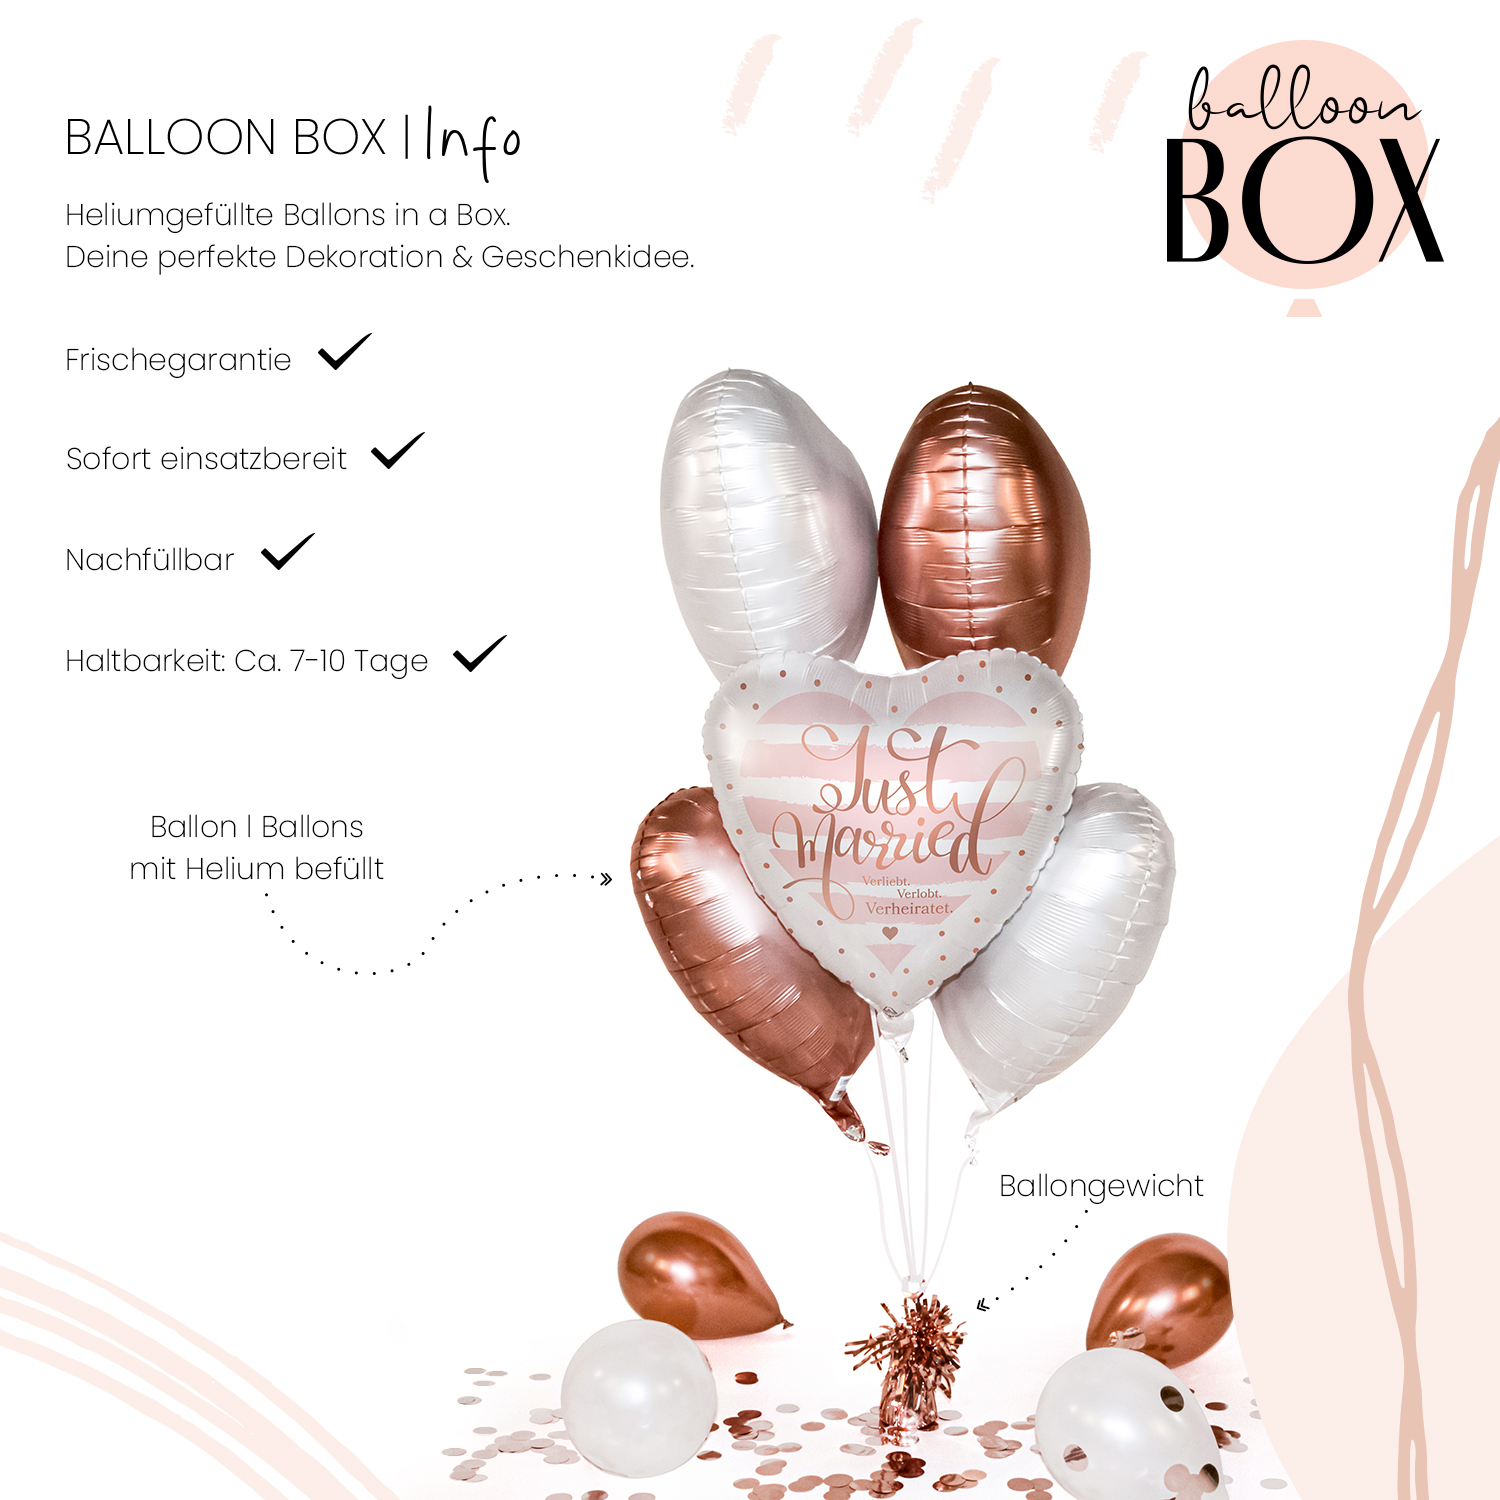 Heliumballon in a Box - Verliebt Verlobt Verheiratet